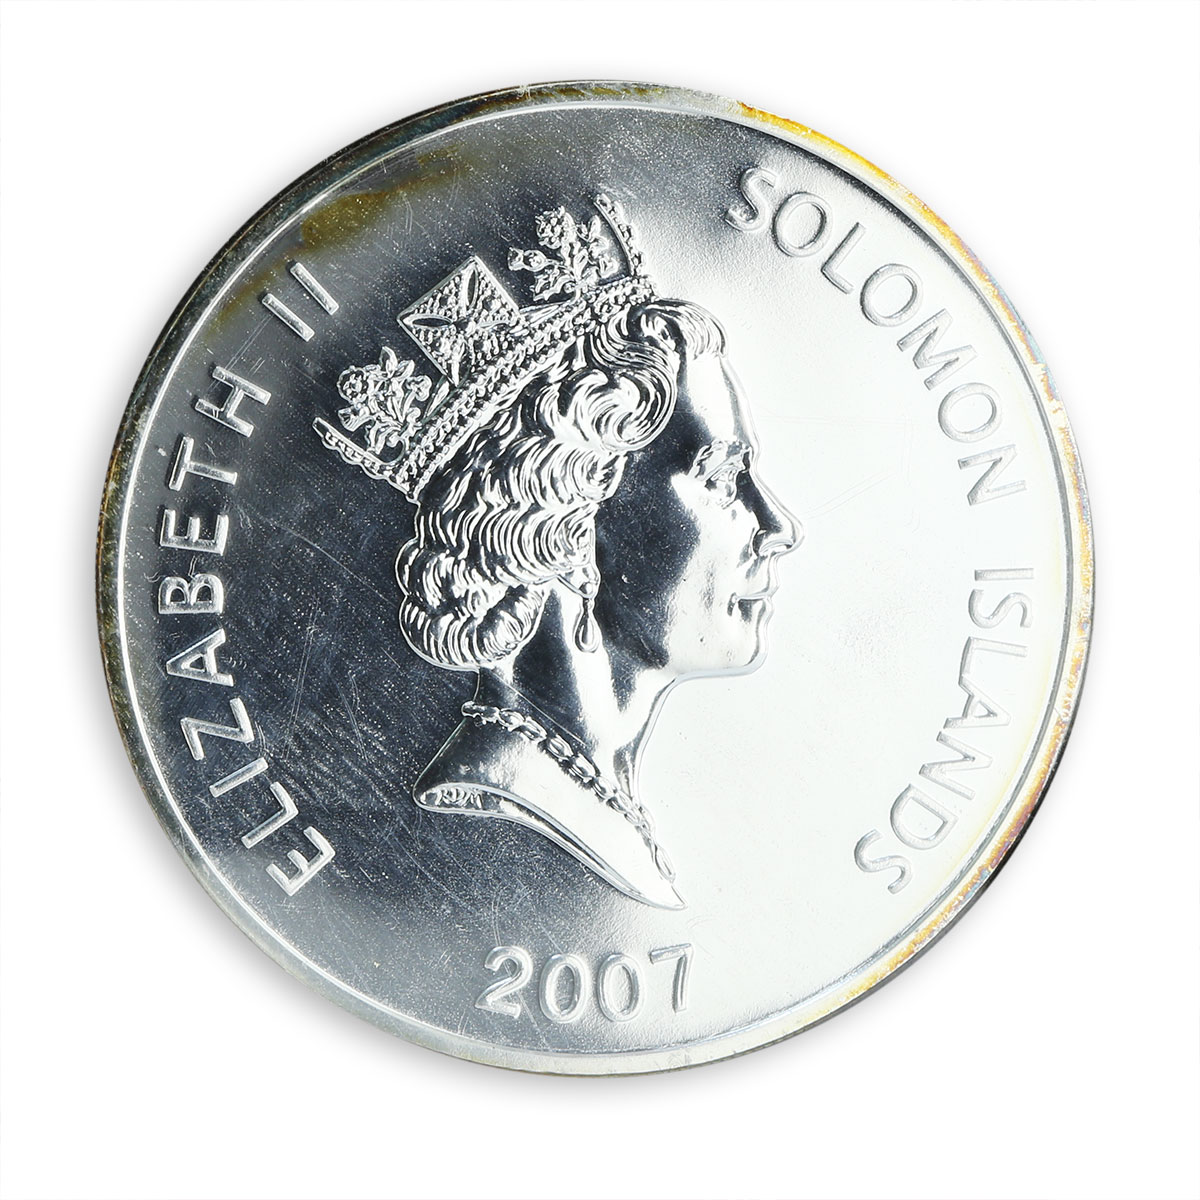 Solomon Islands, 5 dollars, Year of the Pig, Lunar Calendar, silver, coin, 2007